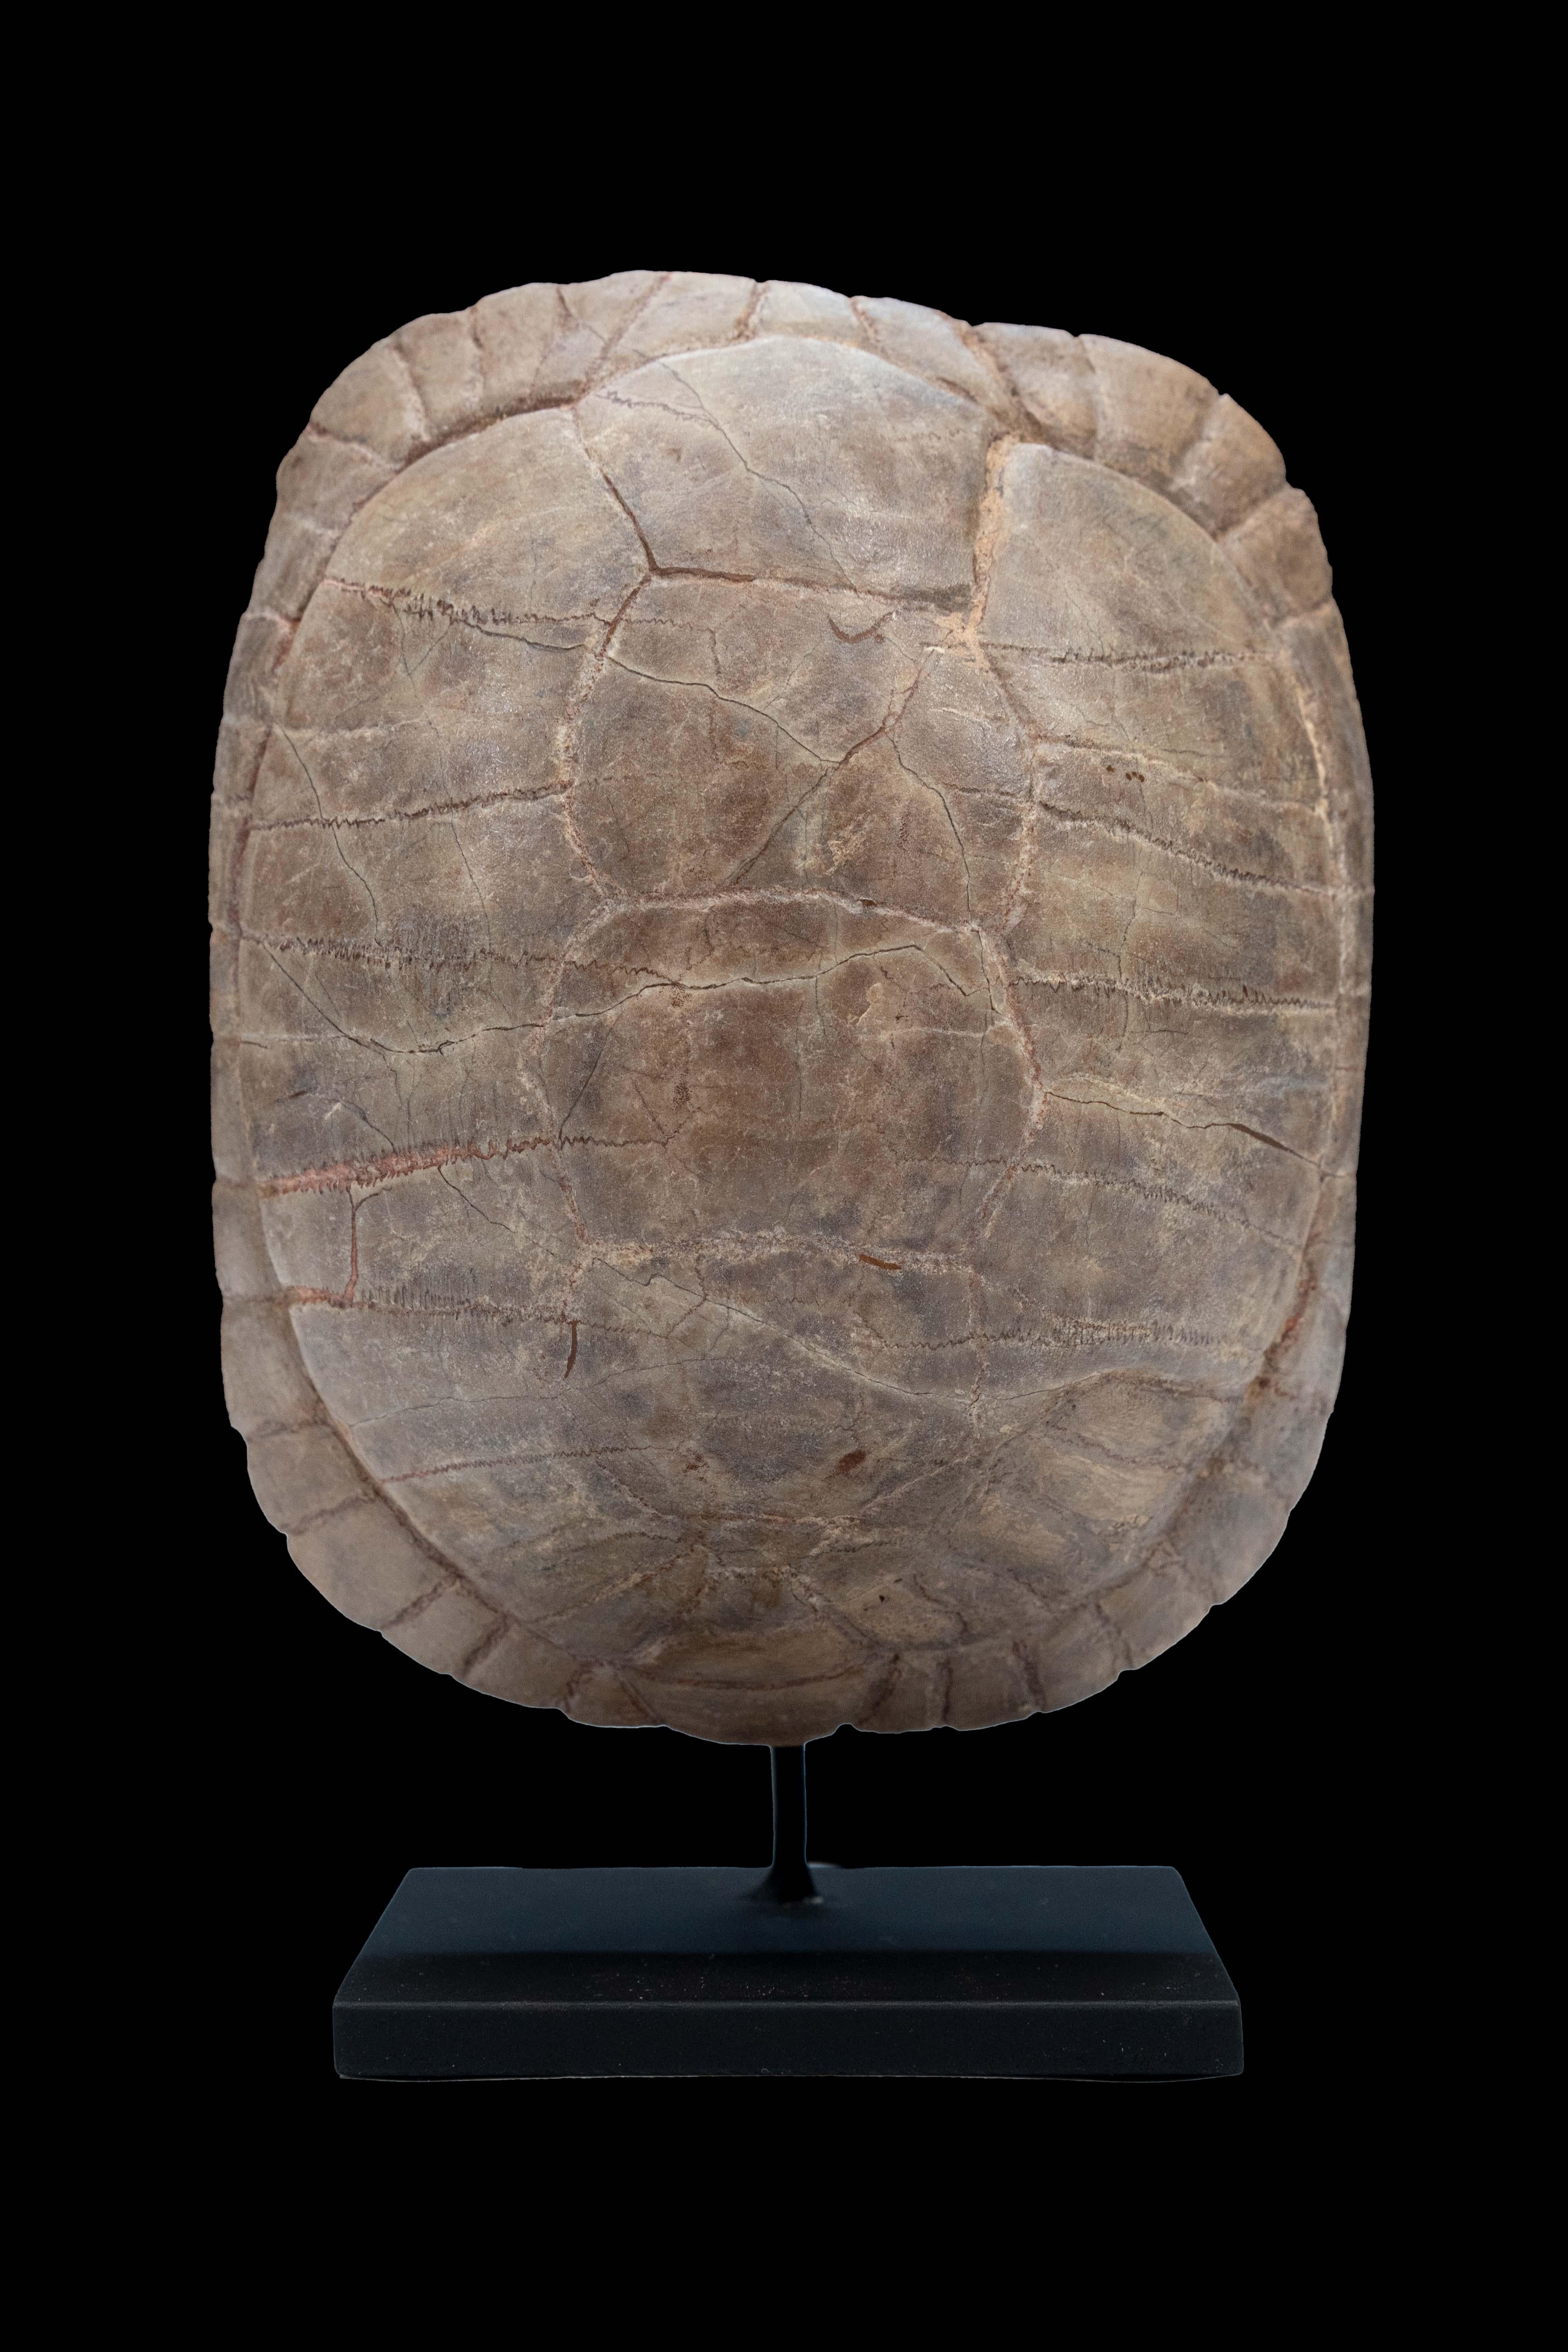 Small sized mounted Turtle Fossil South Dakota Oligocene Period:

Measures: 3